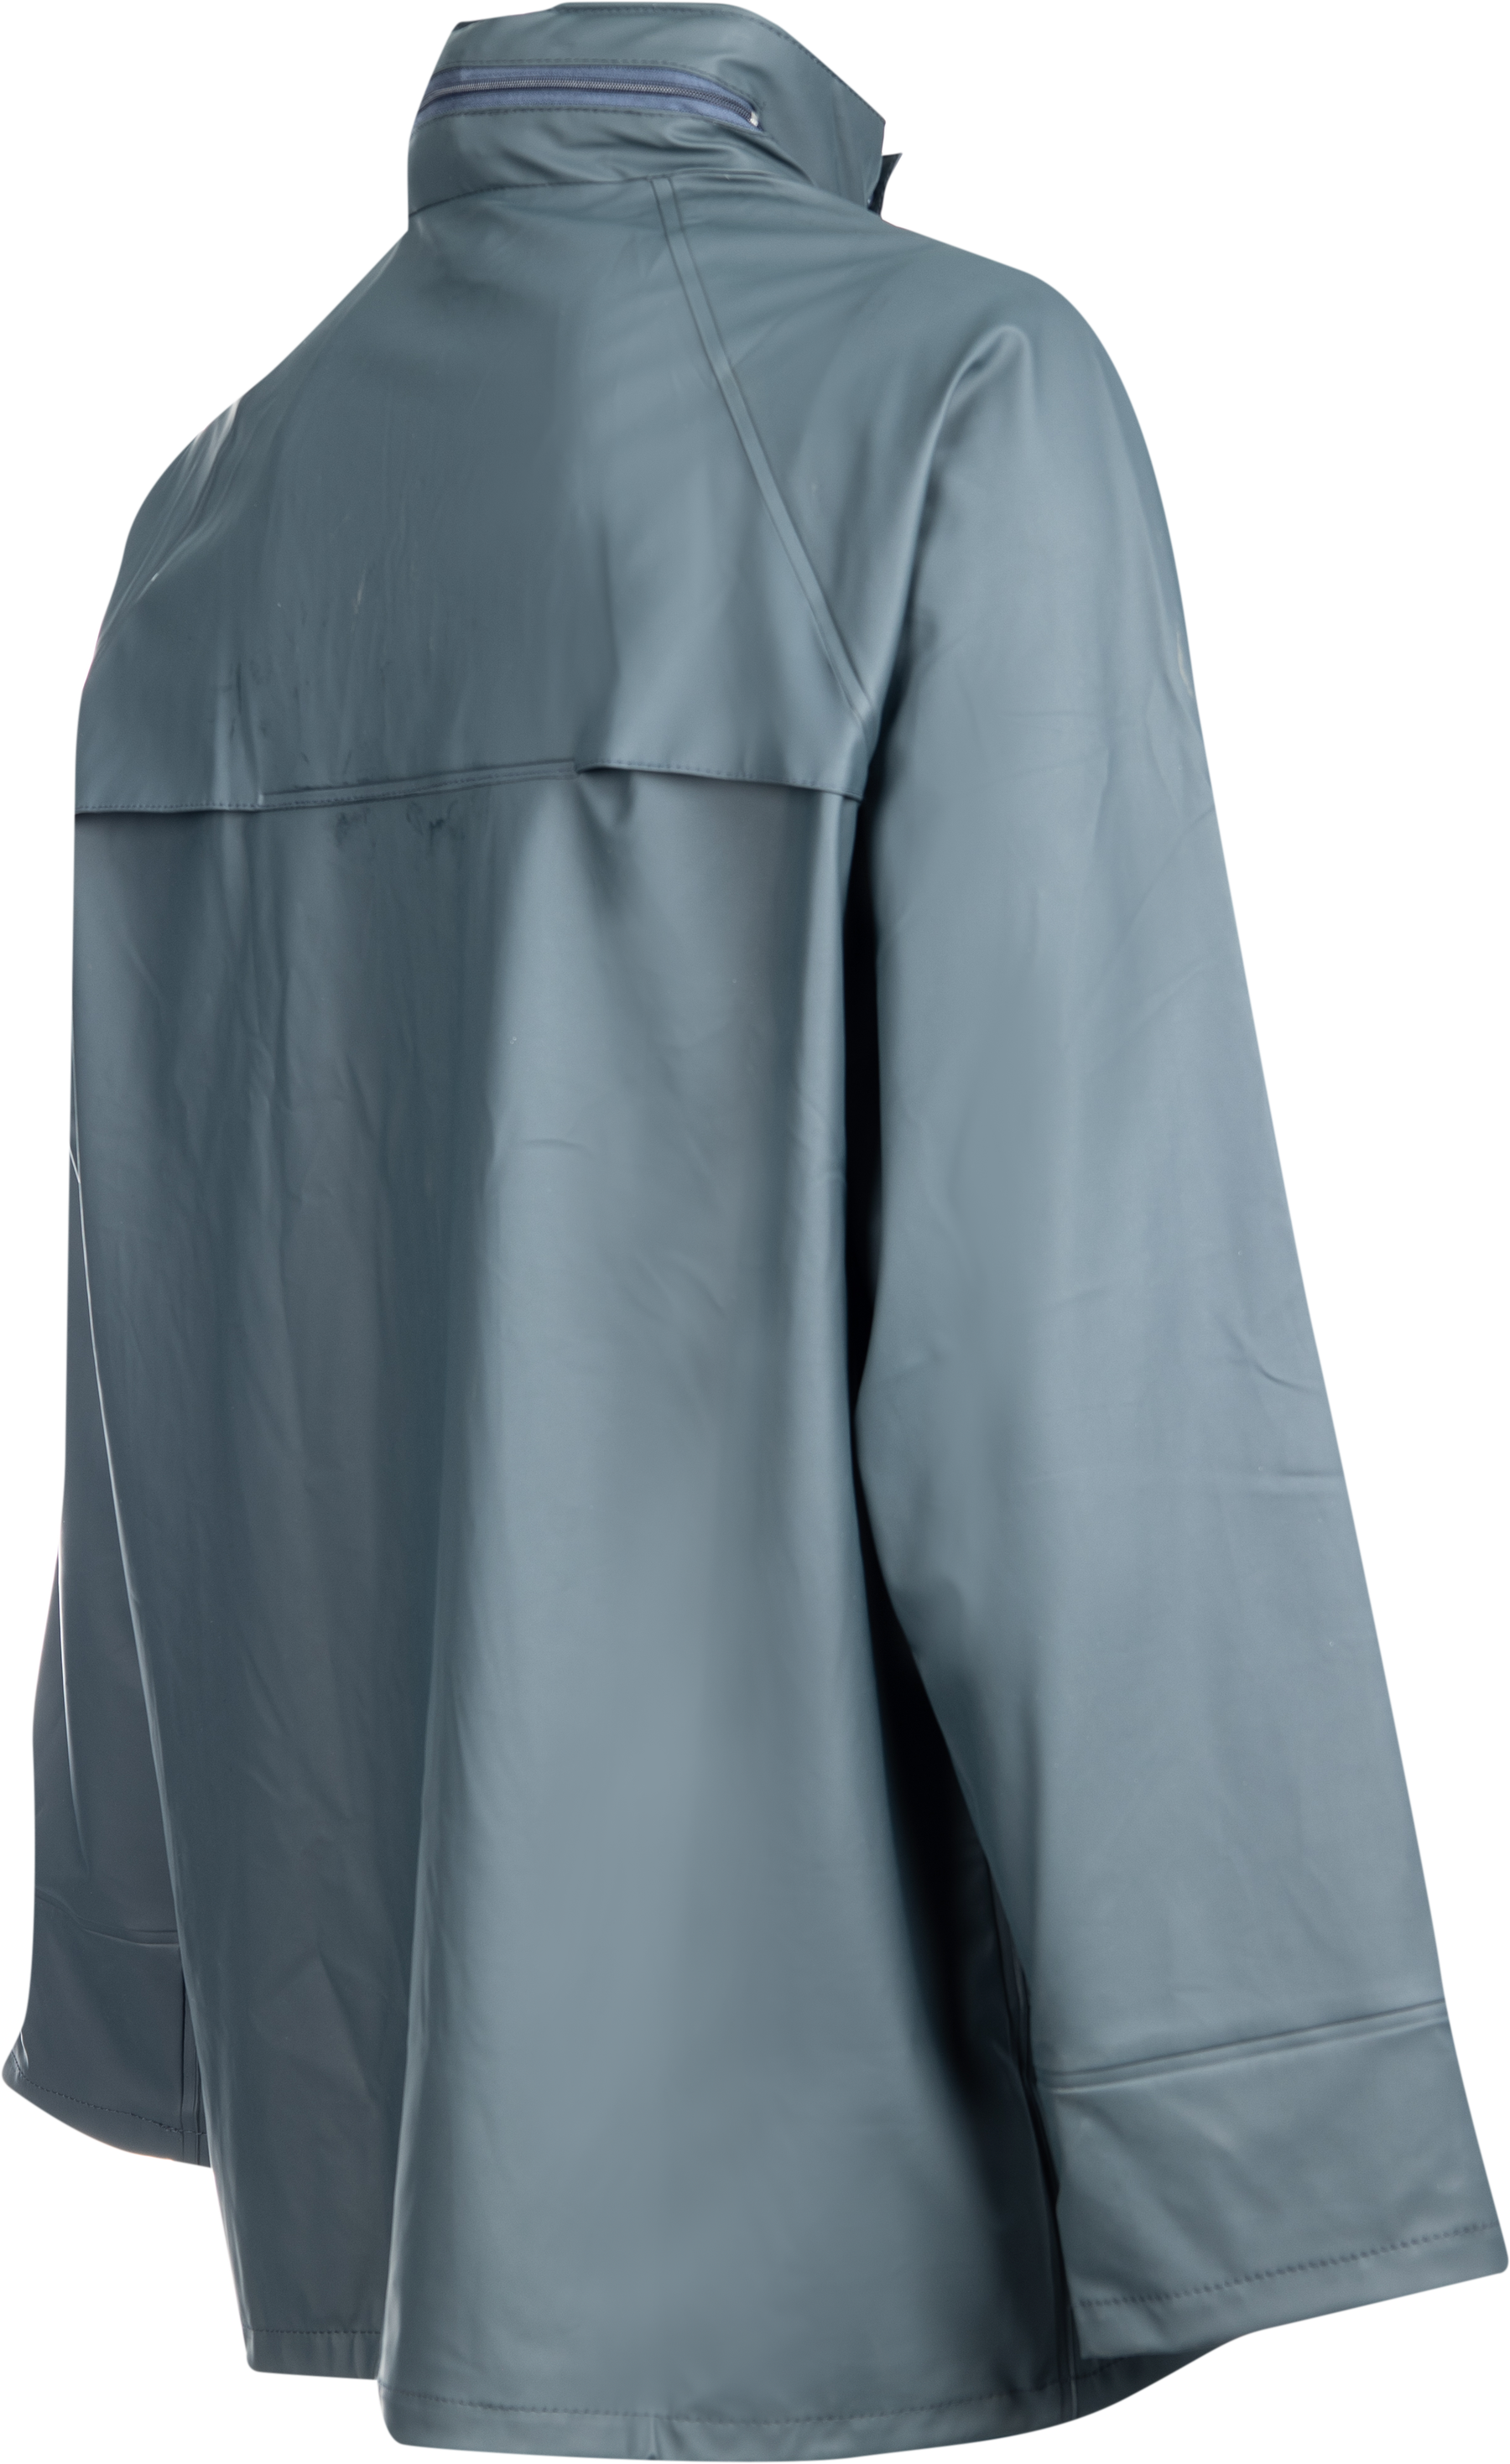 Stormguard PU Rainsuit - Premium Wear